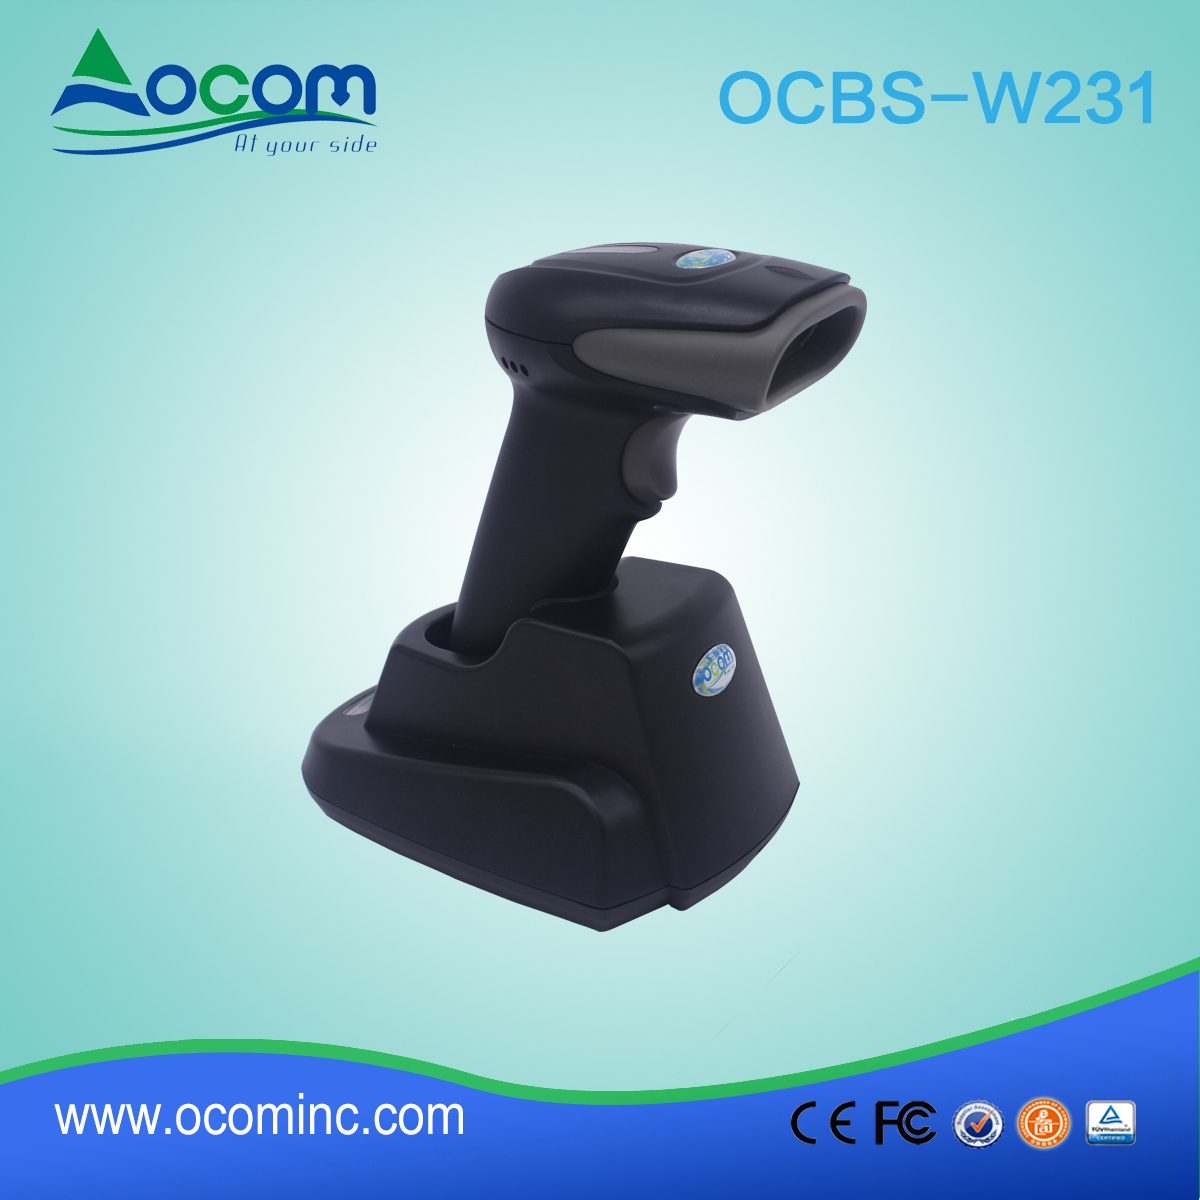 OCBS-W231Wireless frequentie USB Barcode Scanner Reader met geheugen